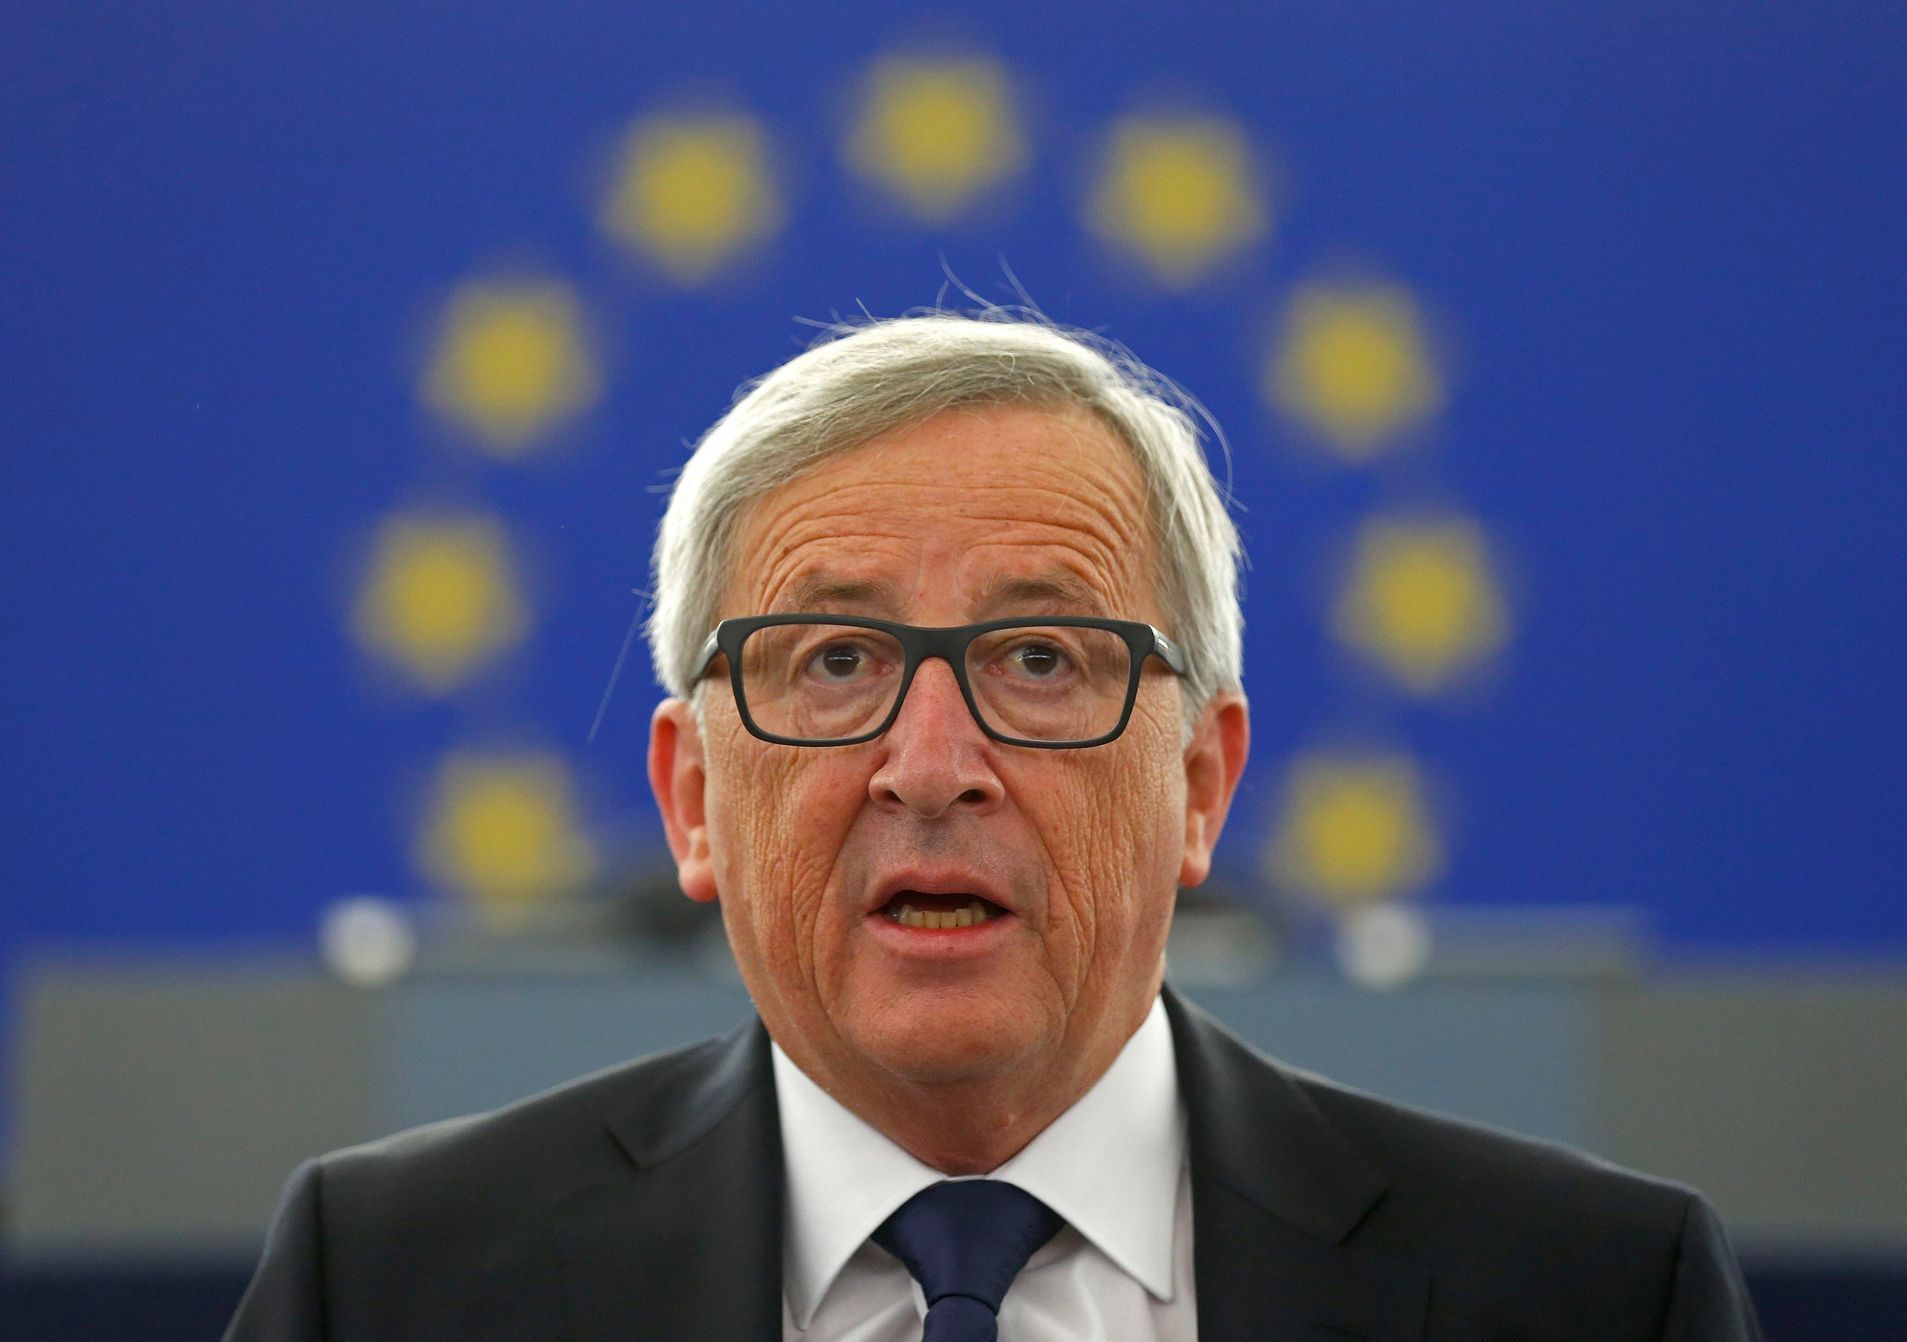 Proslov Junckera v Evropském parlamentu k uprchlické krizi